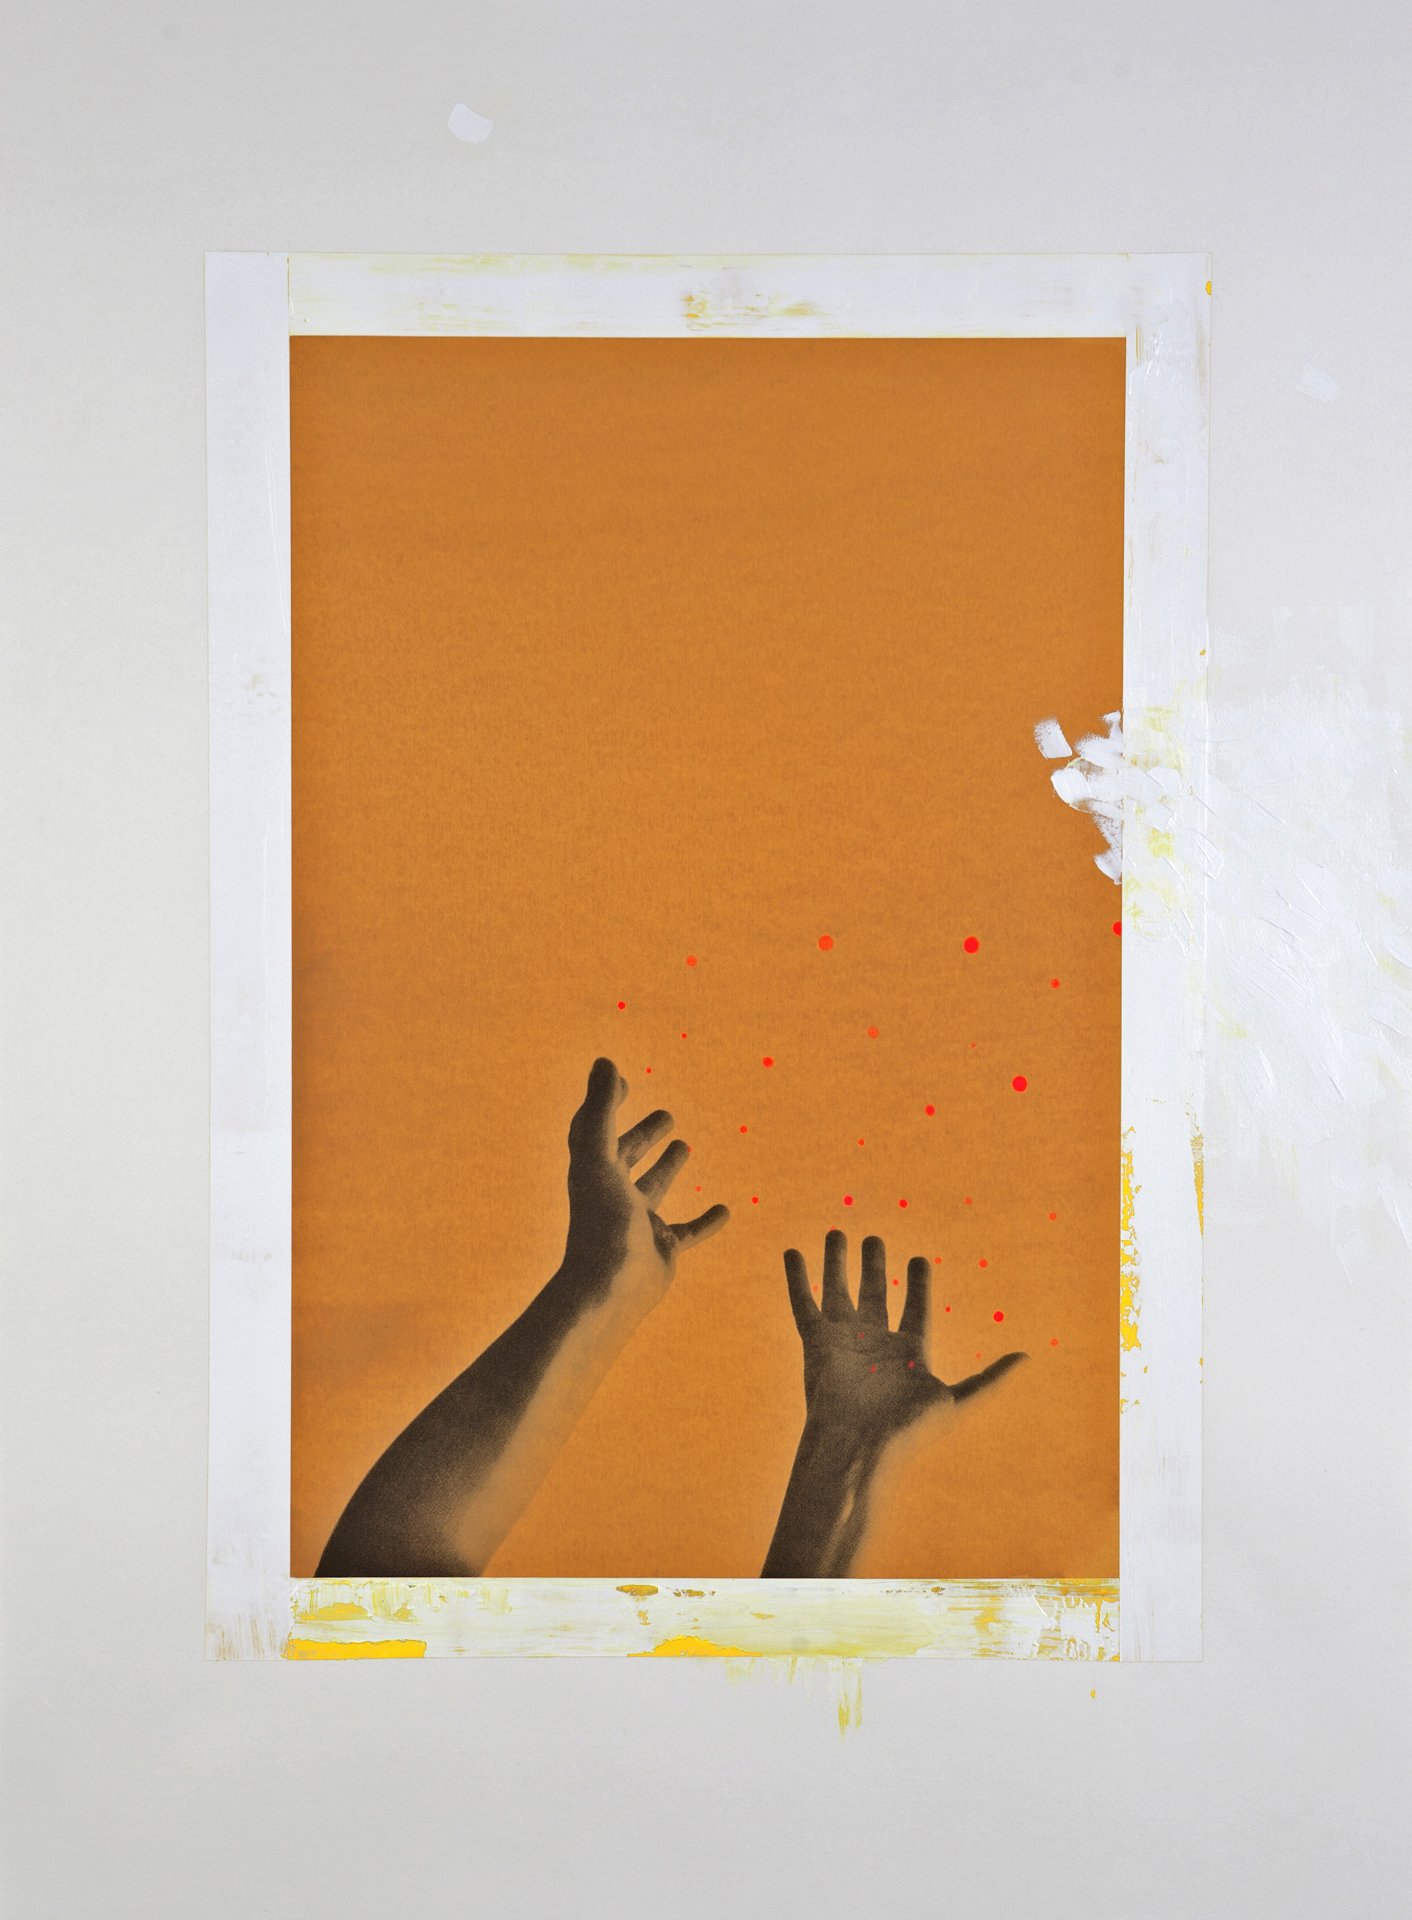    Cultivating No. 14  , 2012, silkscreen print and mixed media, 76 x 56 cm 